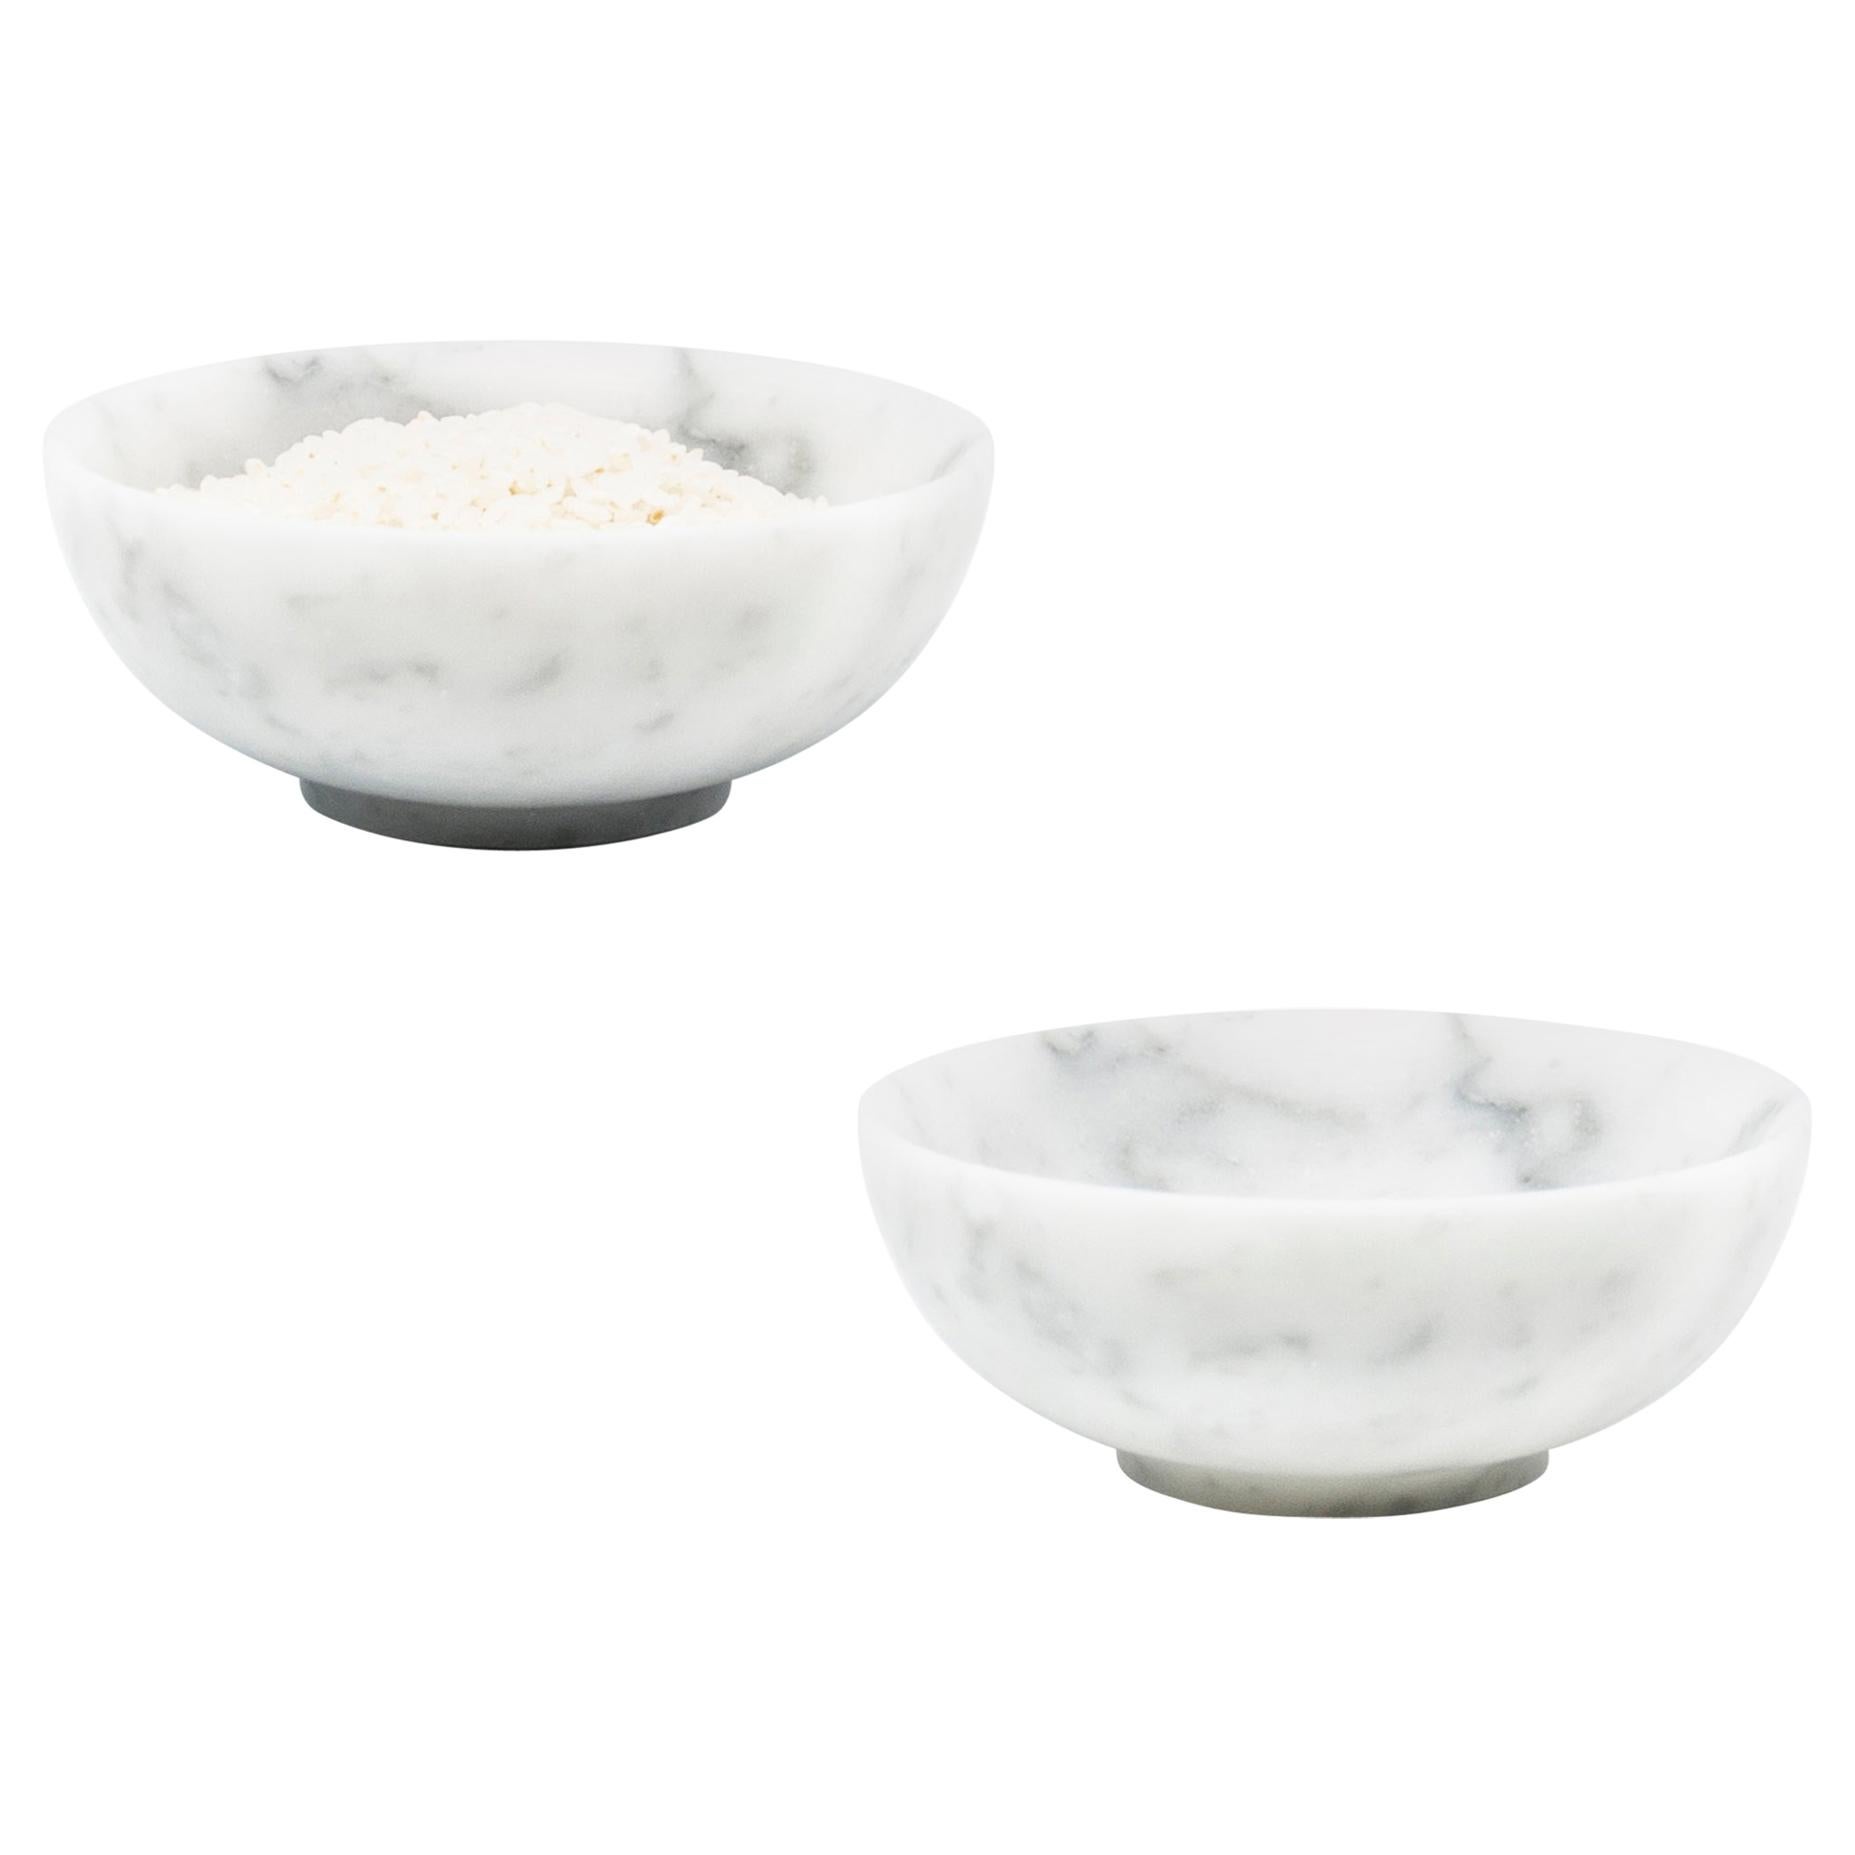 Handmade Small Rice Bowl in Satin White Carrara Marble